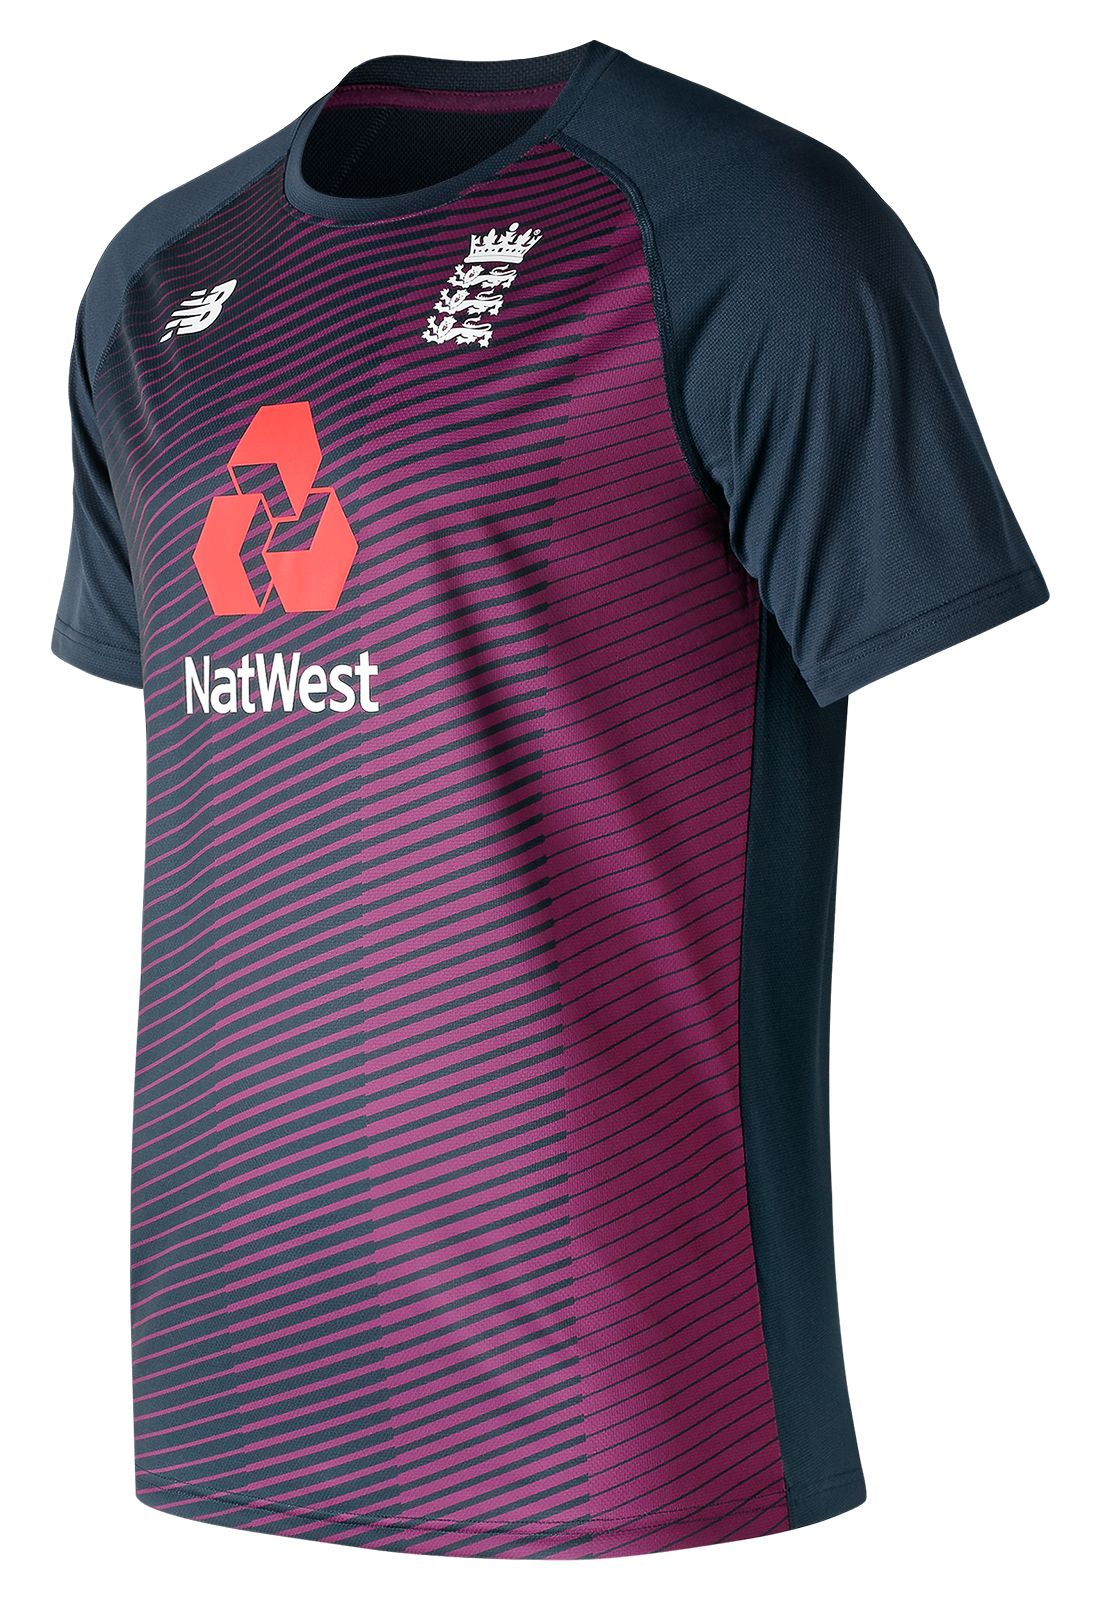 england cricket shirt new balance